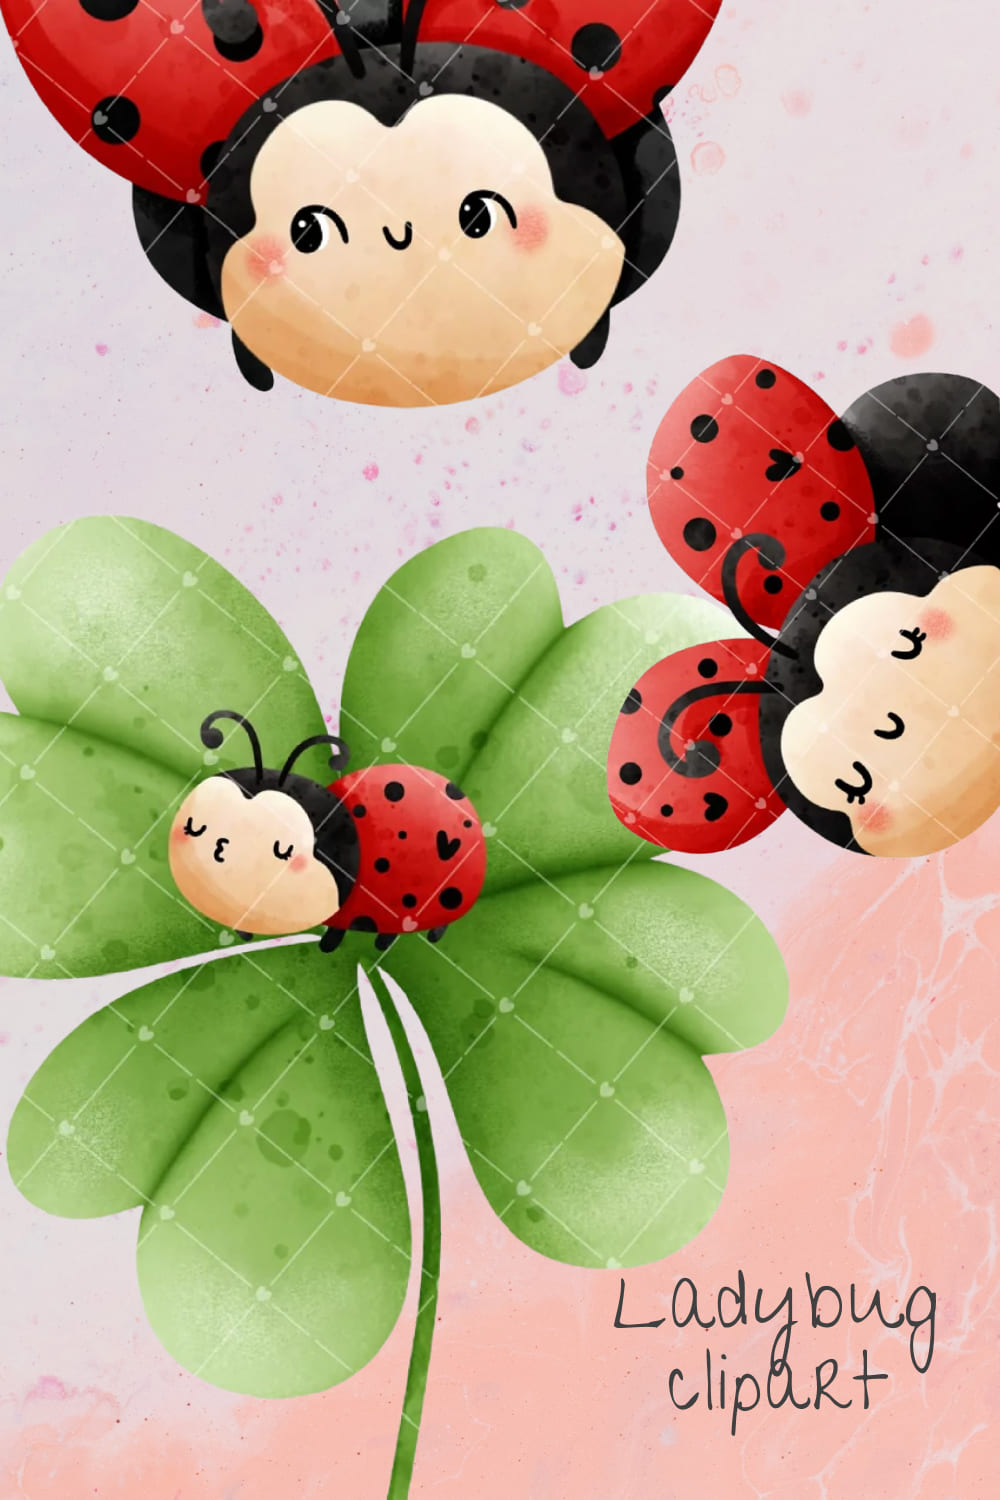 Ladybug clipart - pinterest image preview.